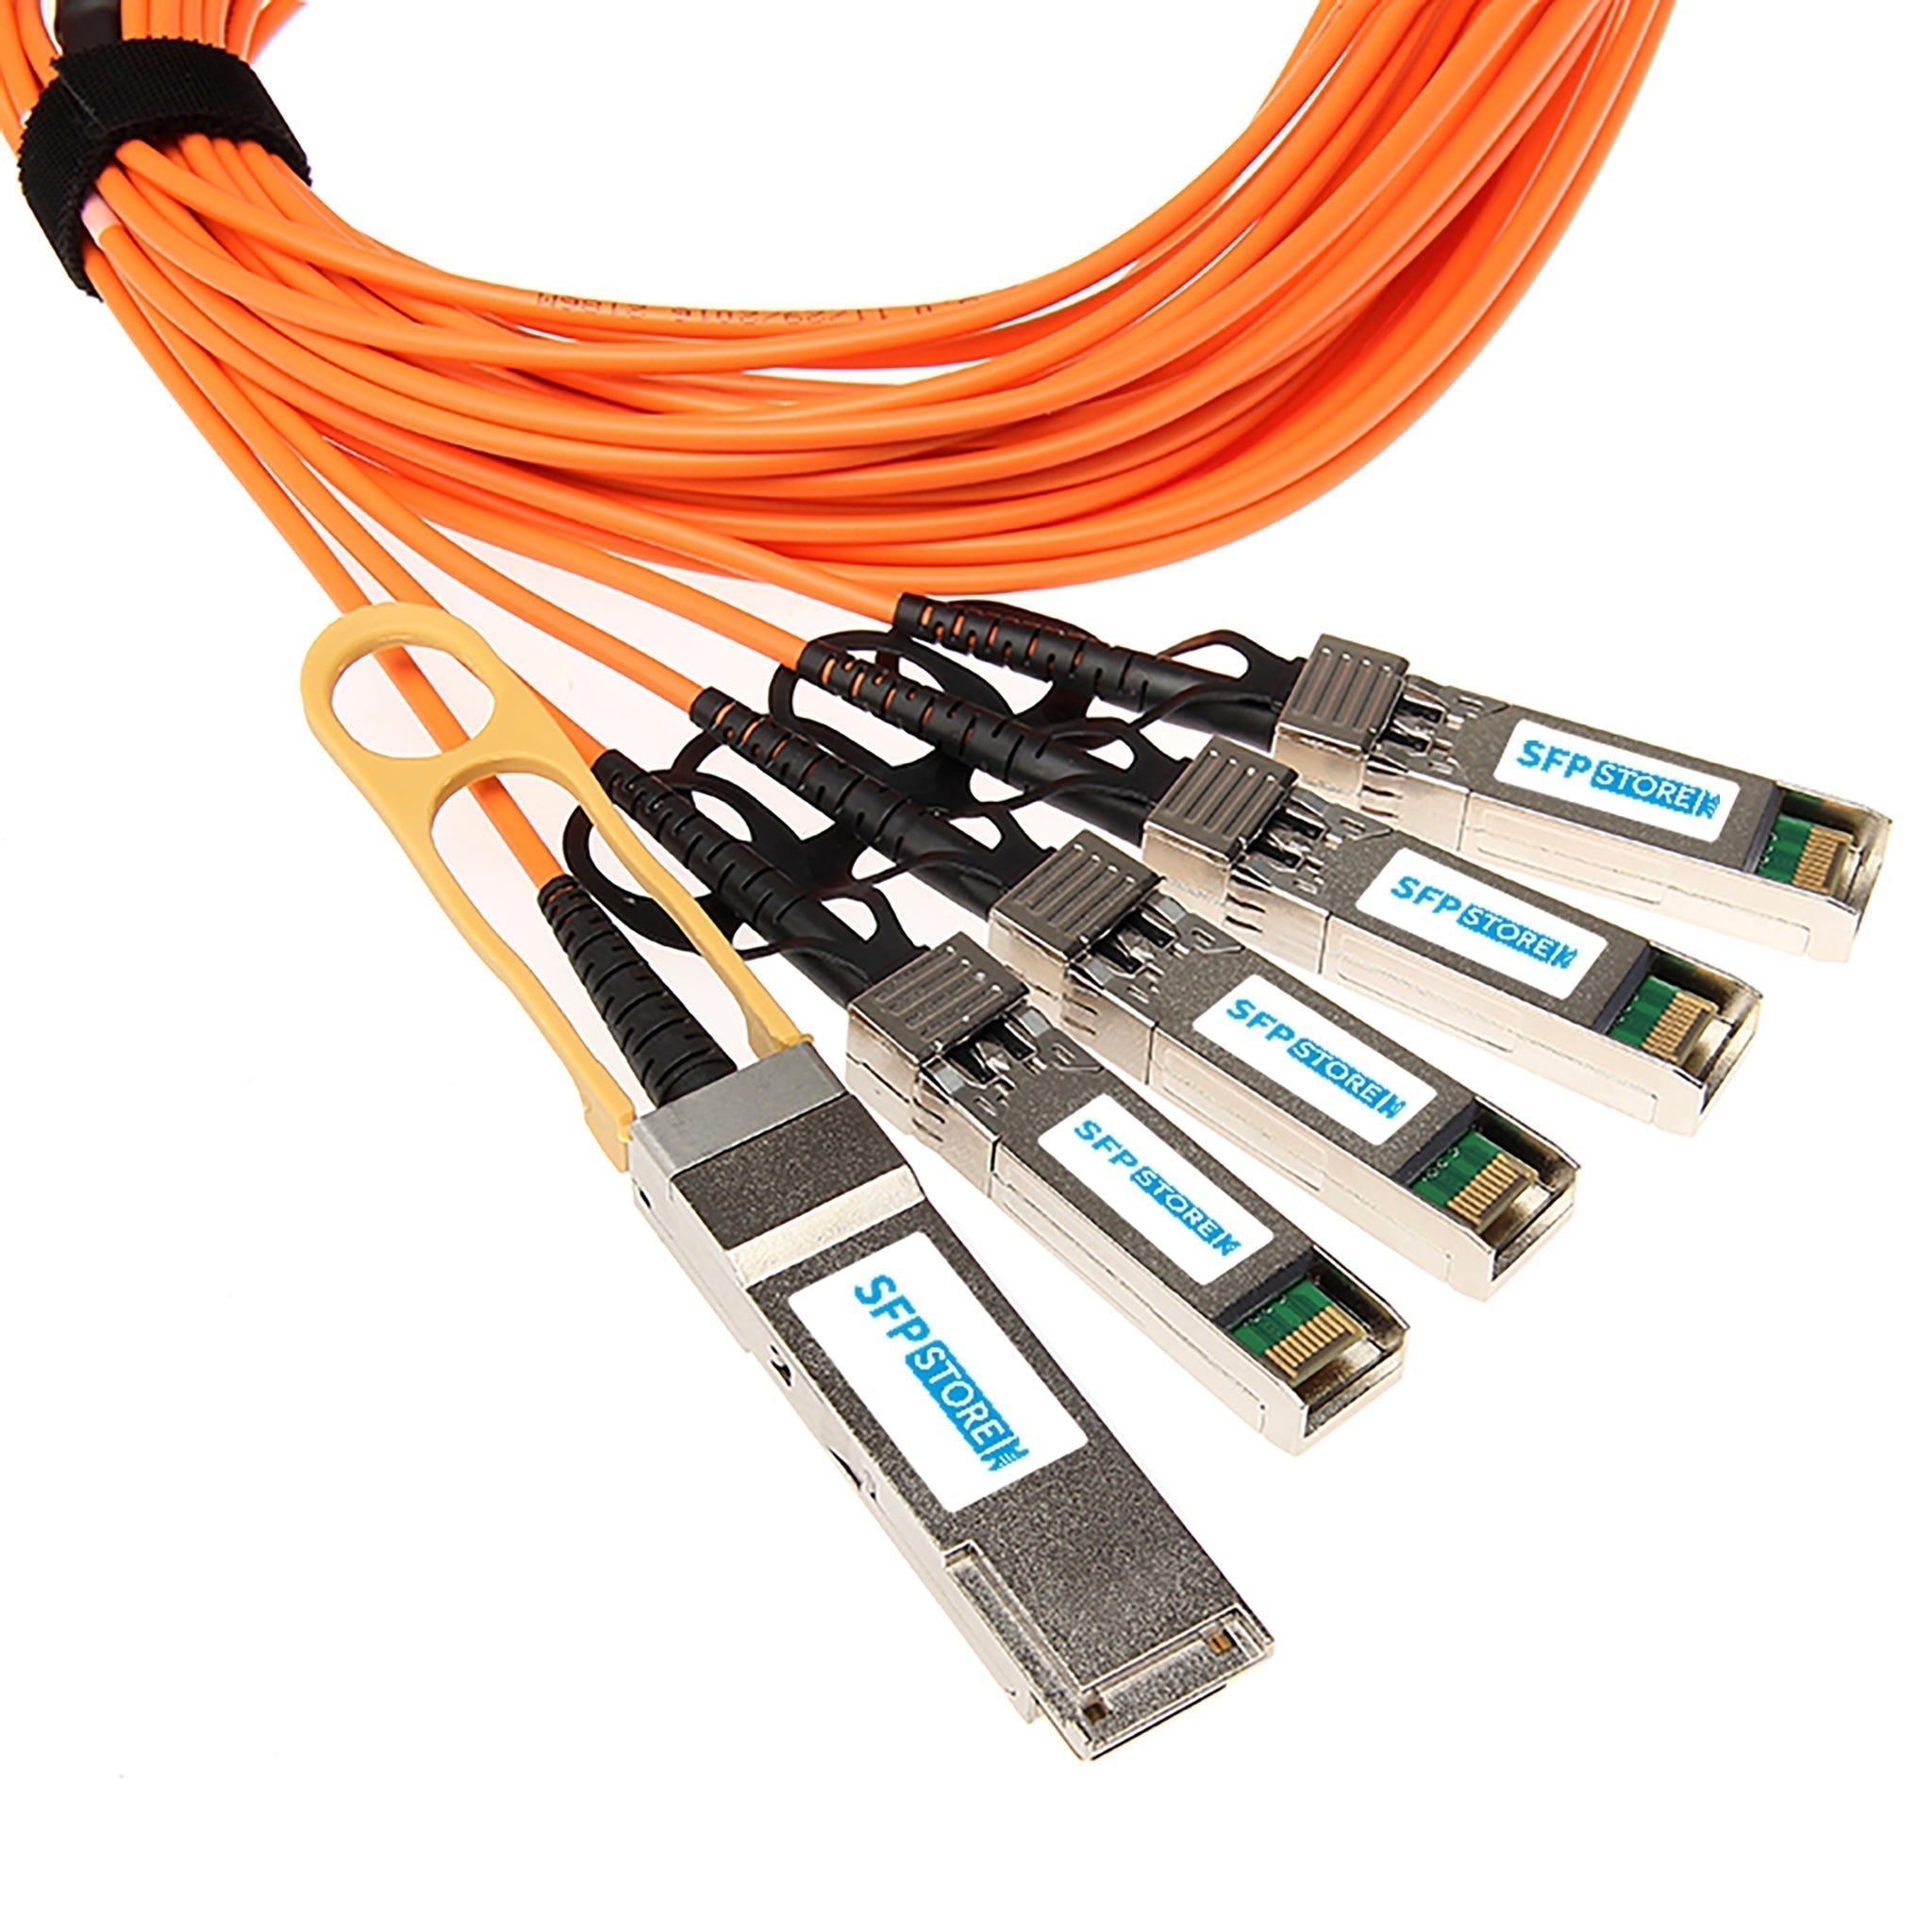 QSFP-4SFP25G-AOC2M-C - 2m Cisco Compatible 100G QSFP28 to 4 x 25G SFP28 Active Optical Cable